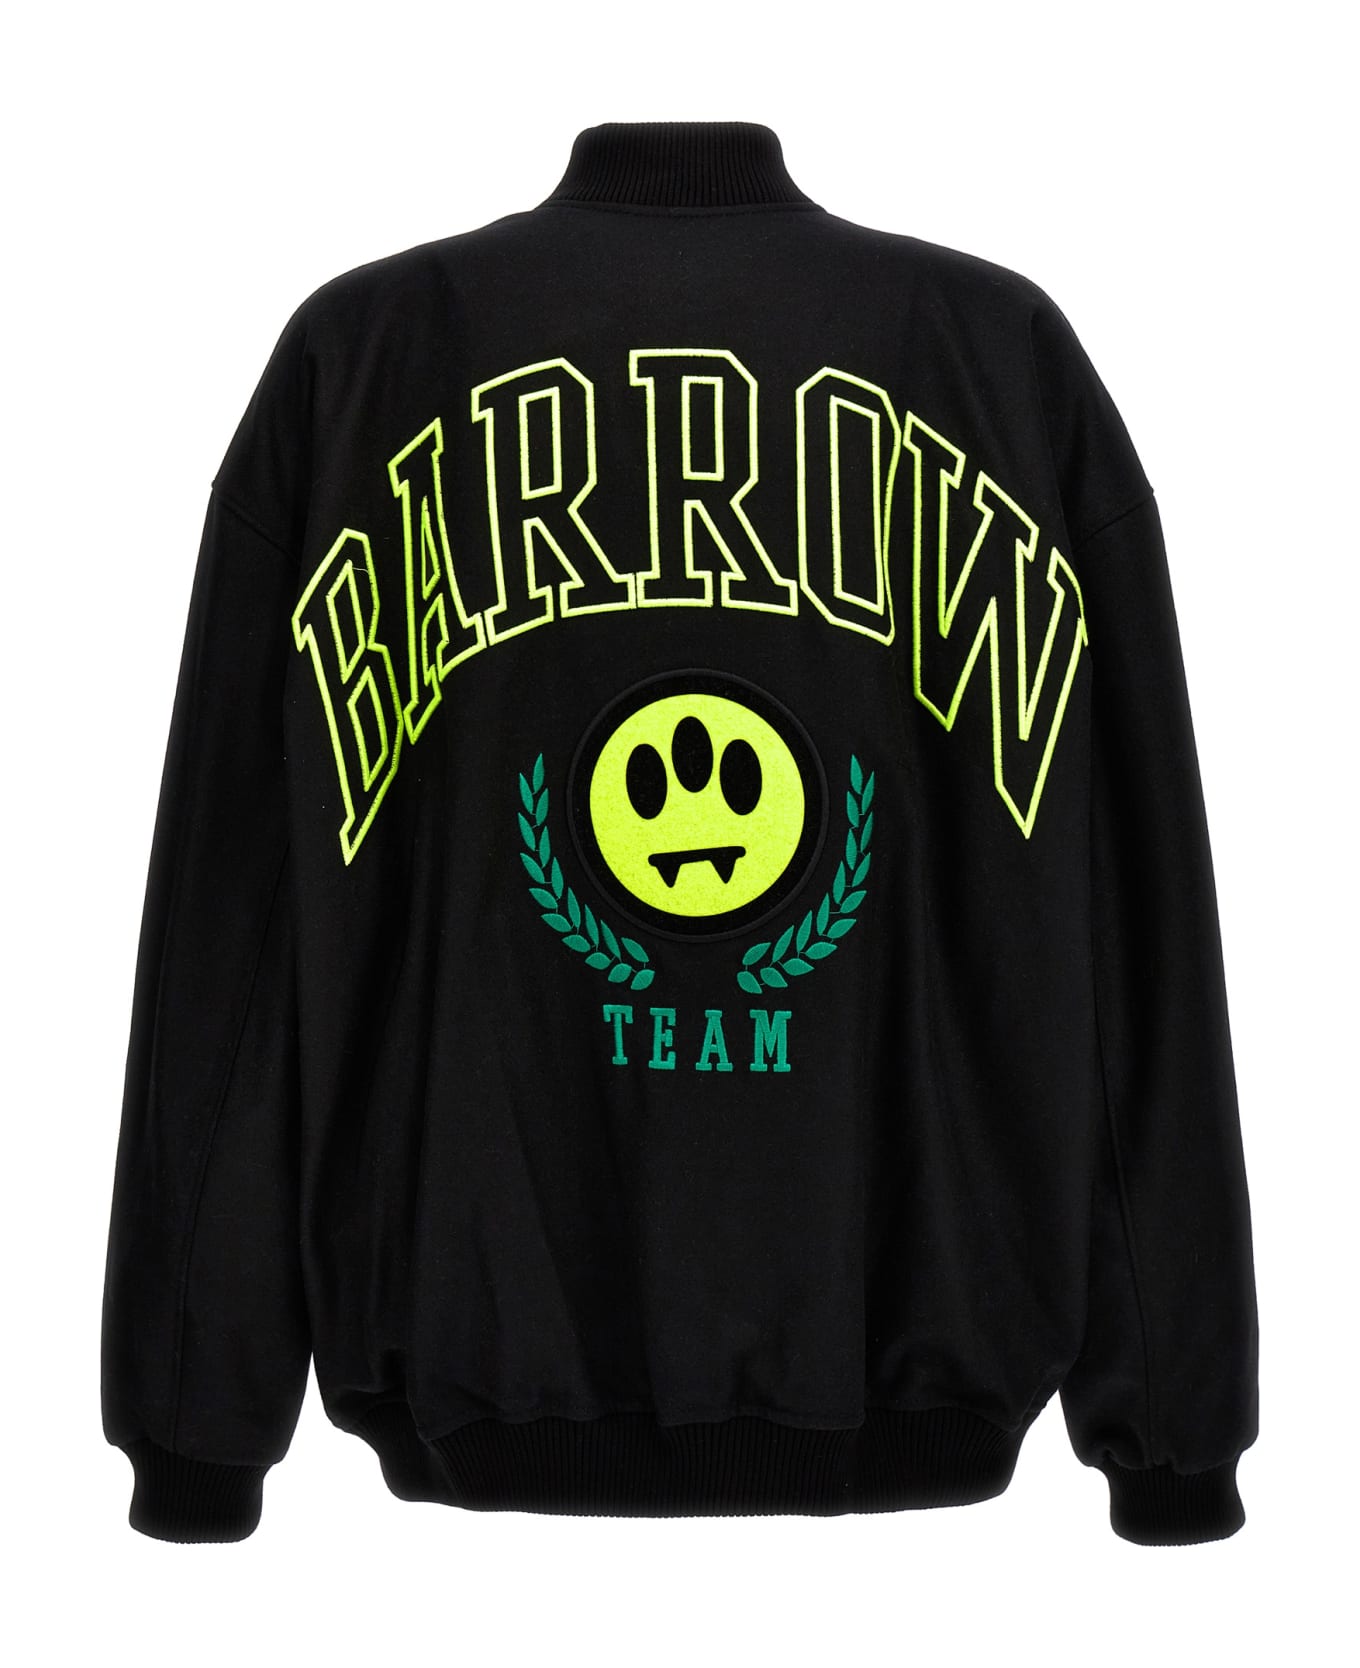 Barrow Black Bomber Jacket With 'barrow Team' Embroidery - Black ジャケット